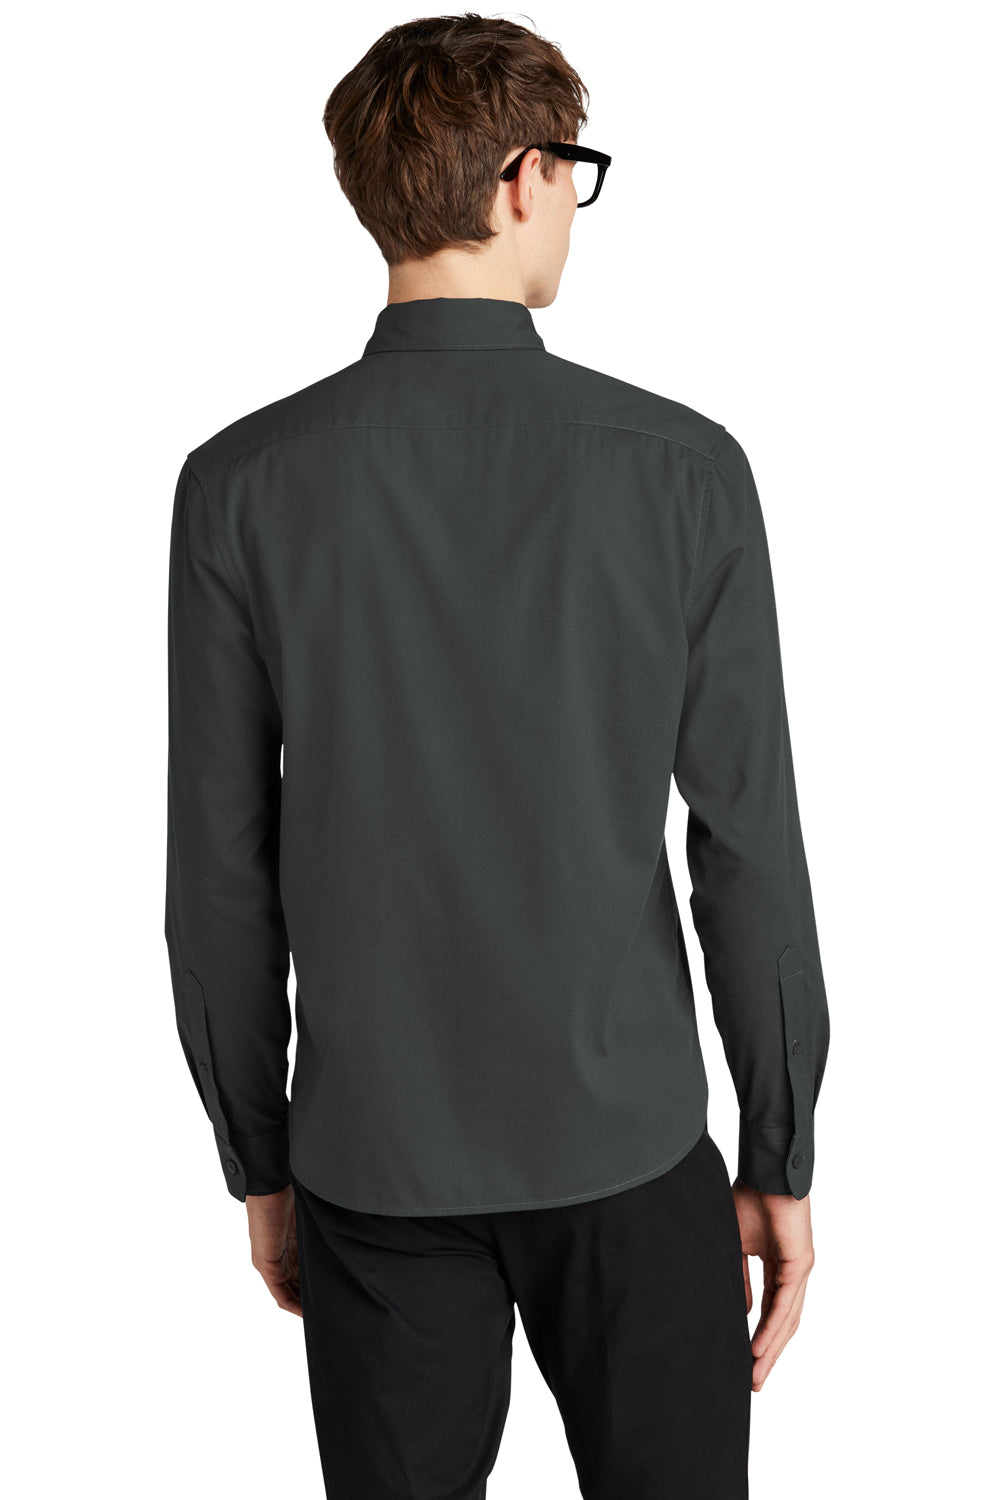 Mercer+Mettle MM2000 Stretch Woven Long Sleeve Button Down Shirt Anchor Grey Back